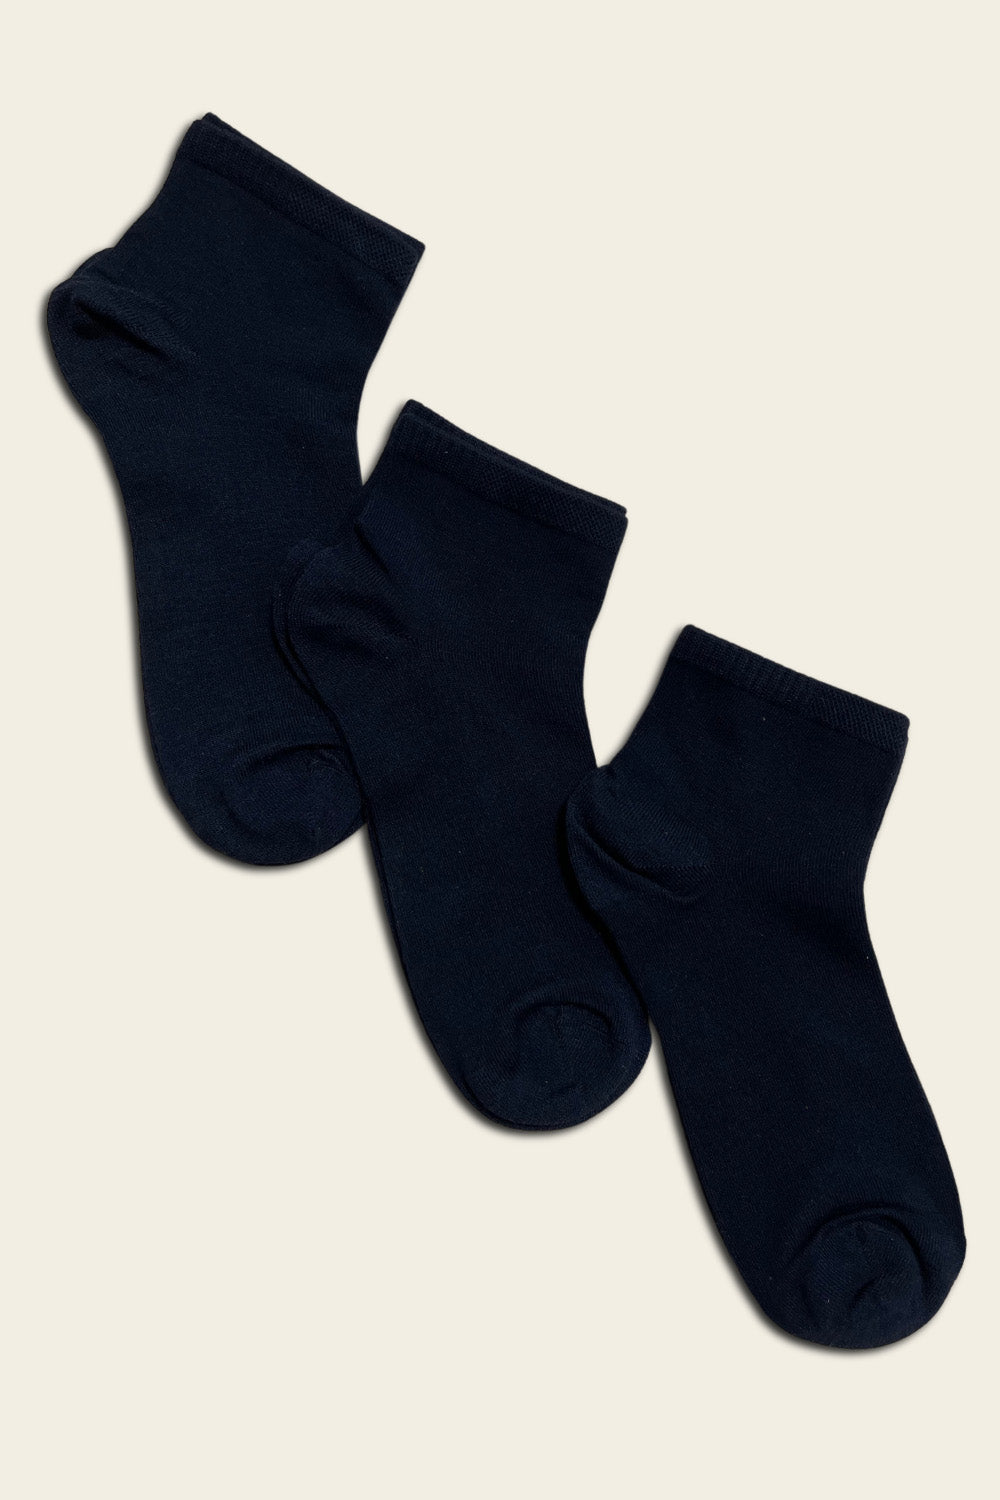 Low Seamless Dark Blue Bamboo Socks - 6 pairs